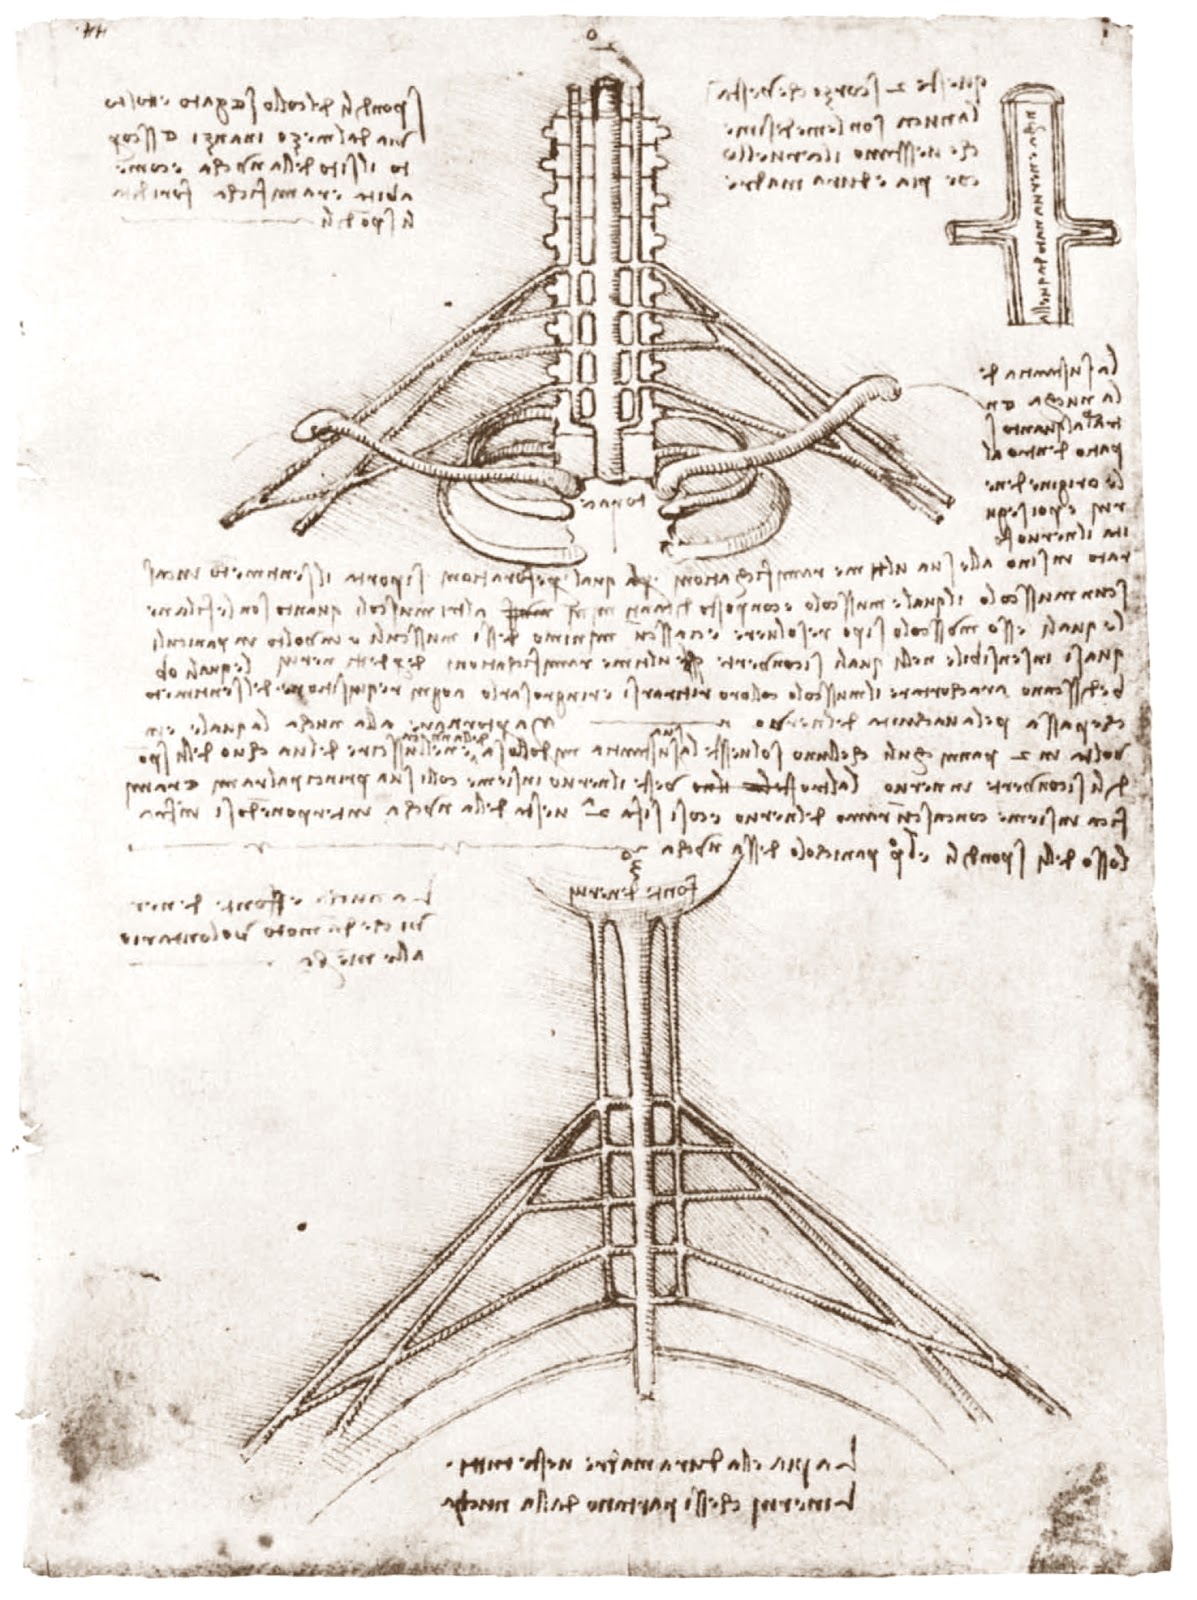 Leonardo+da+Vinci-1452-1519 (782).jpg